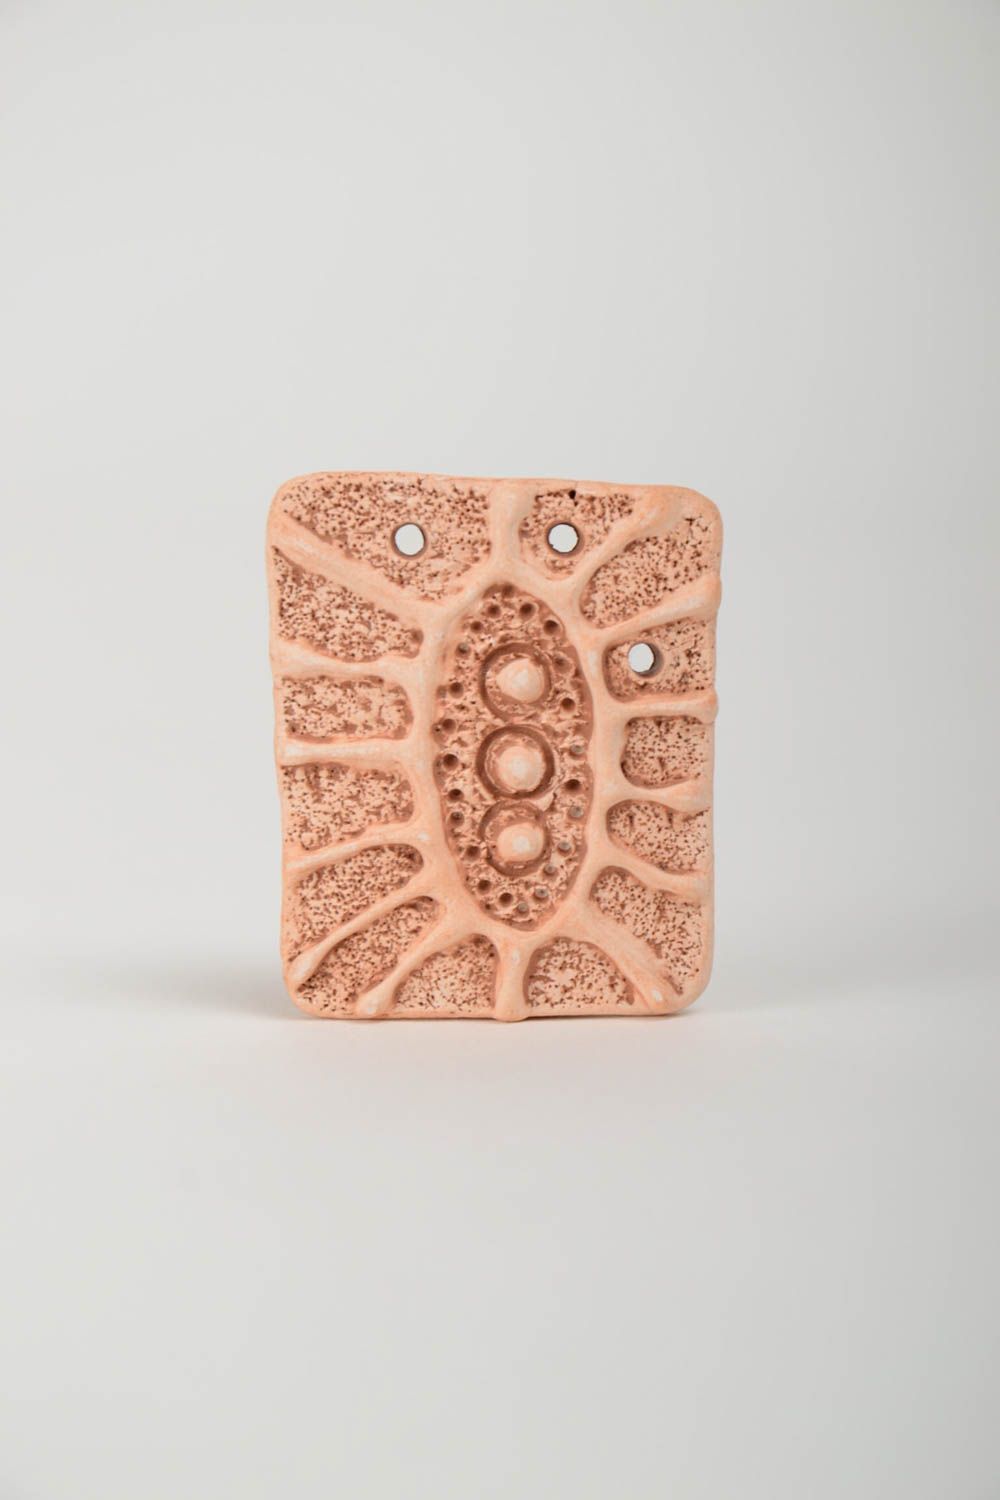 Homemade designer clay craft blank pendant DIY jewelry making supplies photo 2